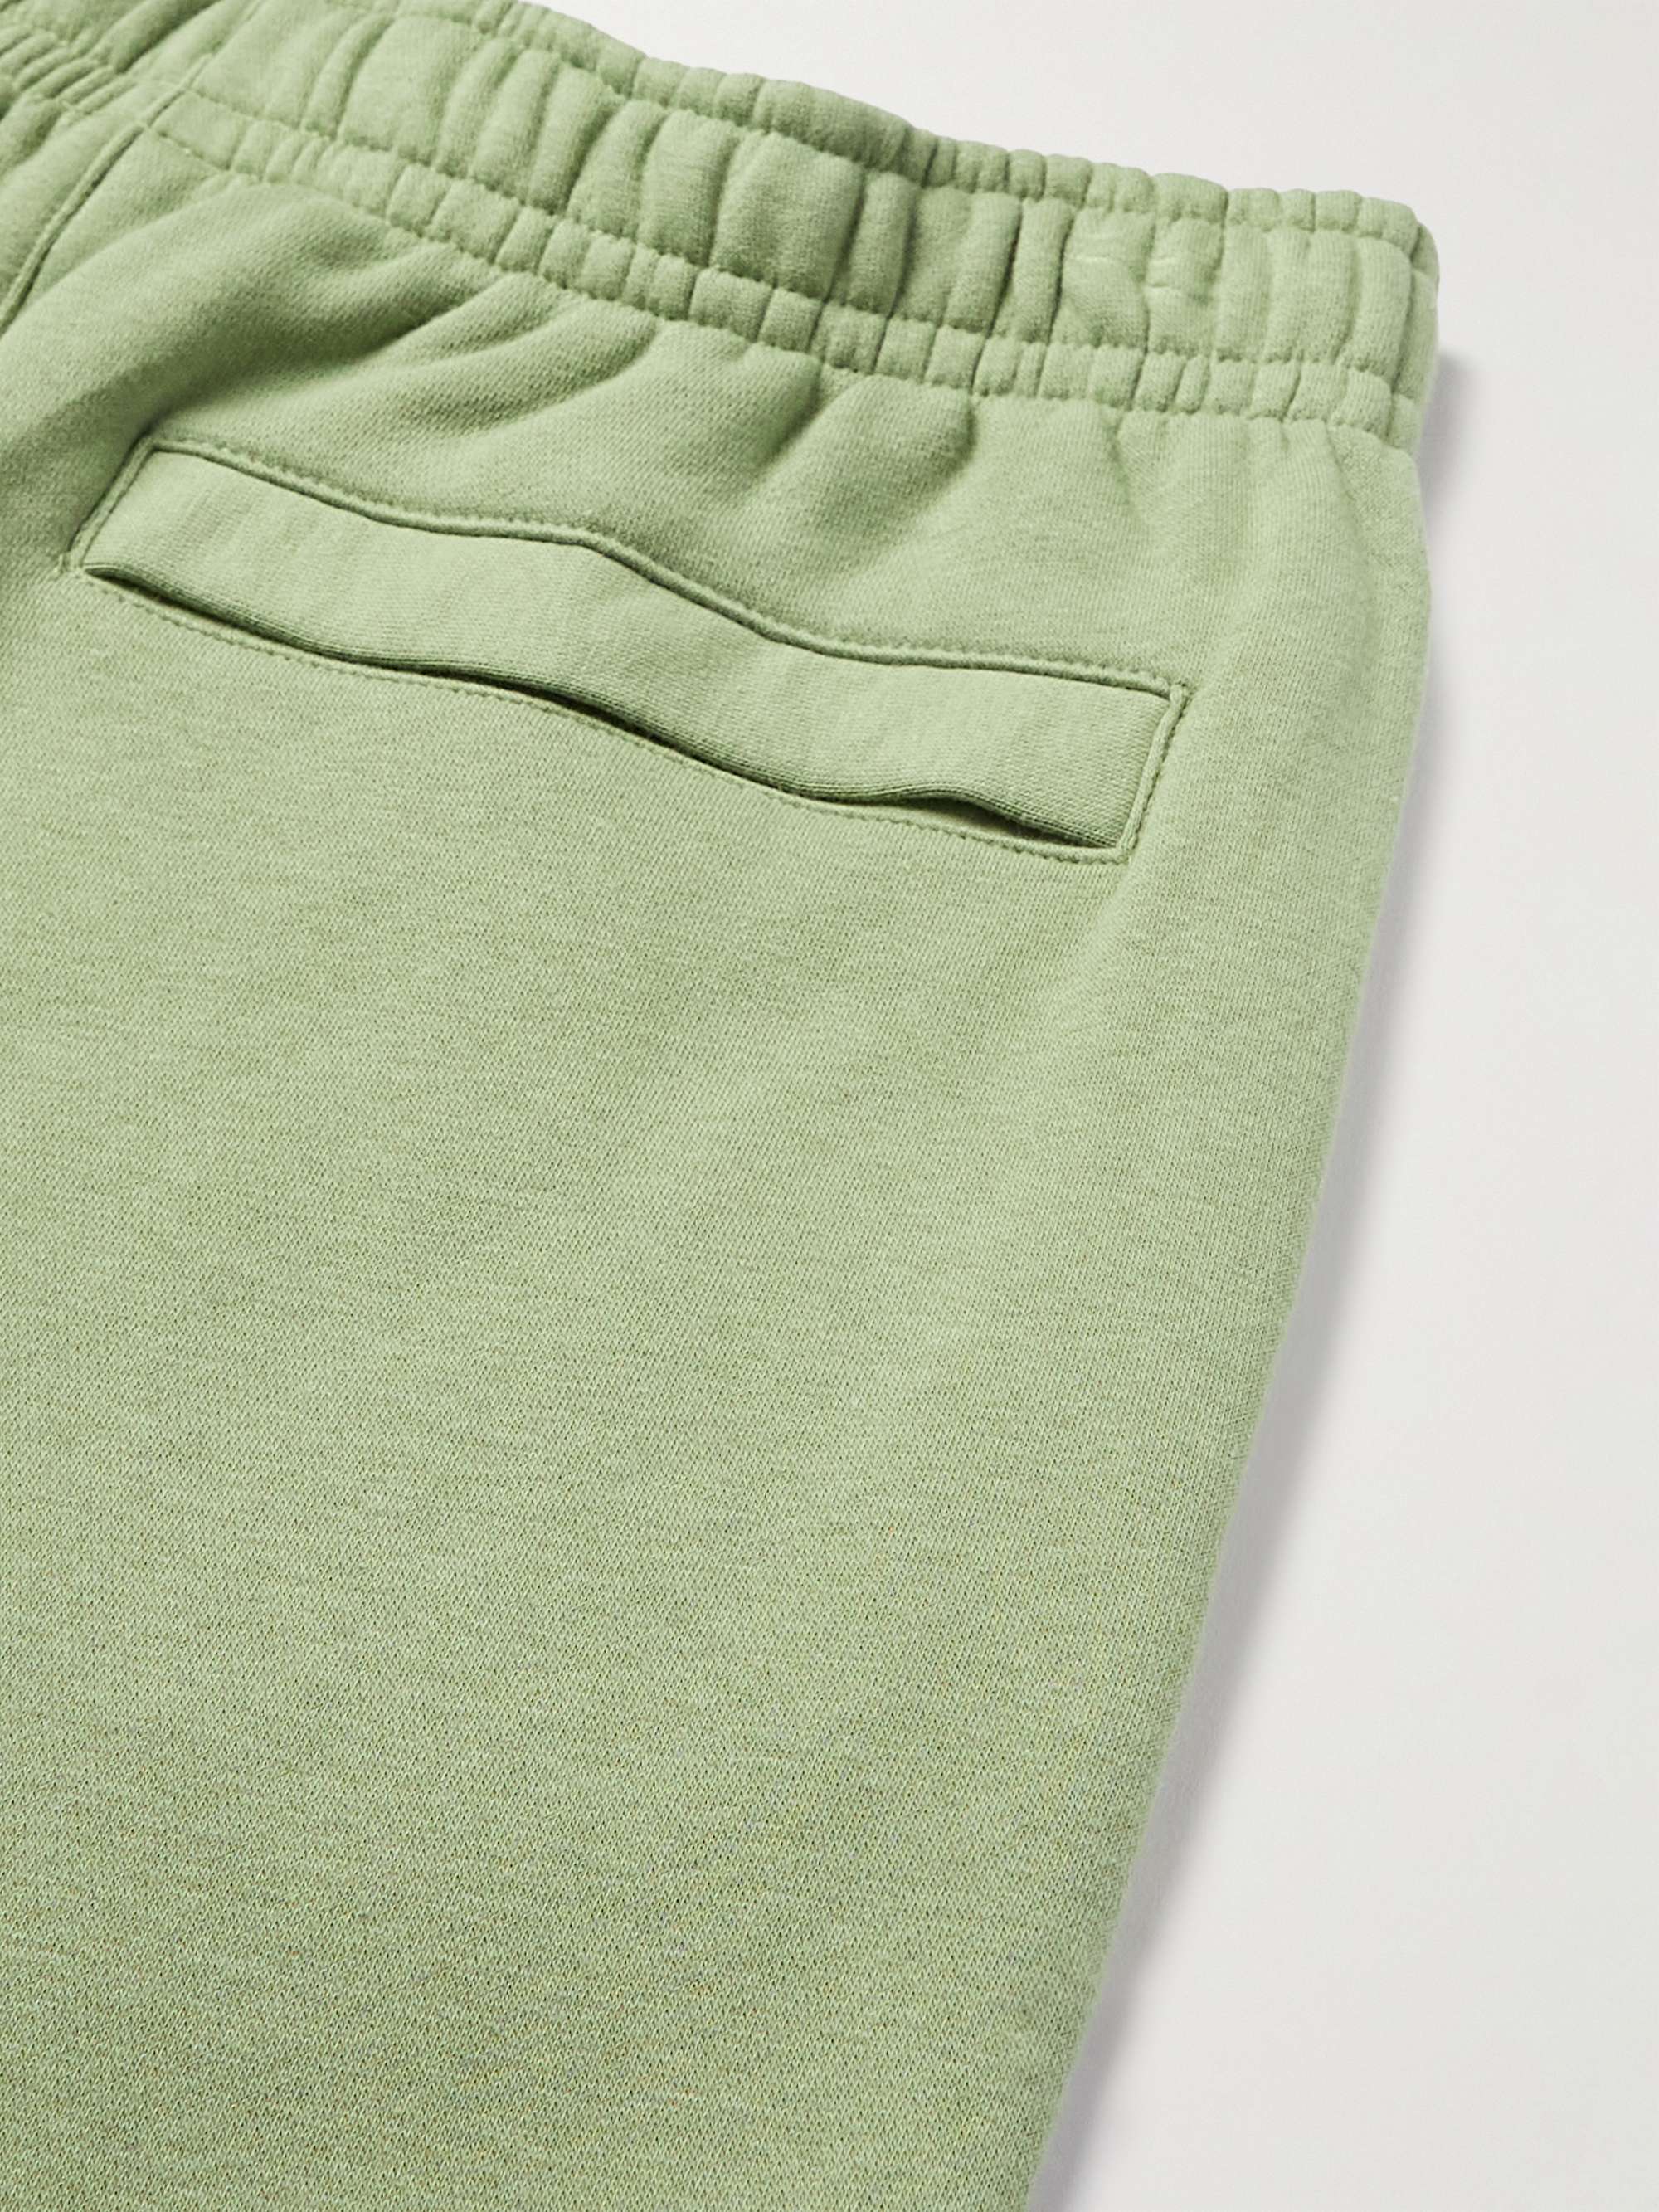 NIKE Sportswear Tapered Cotton-Blend Jersey Sweatpants for Men | MR PORTER